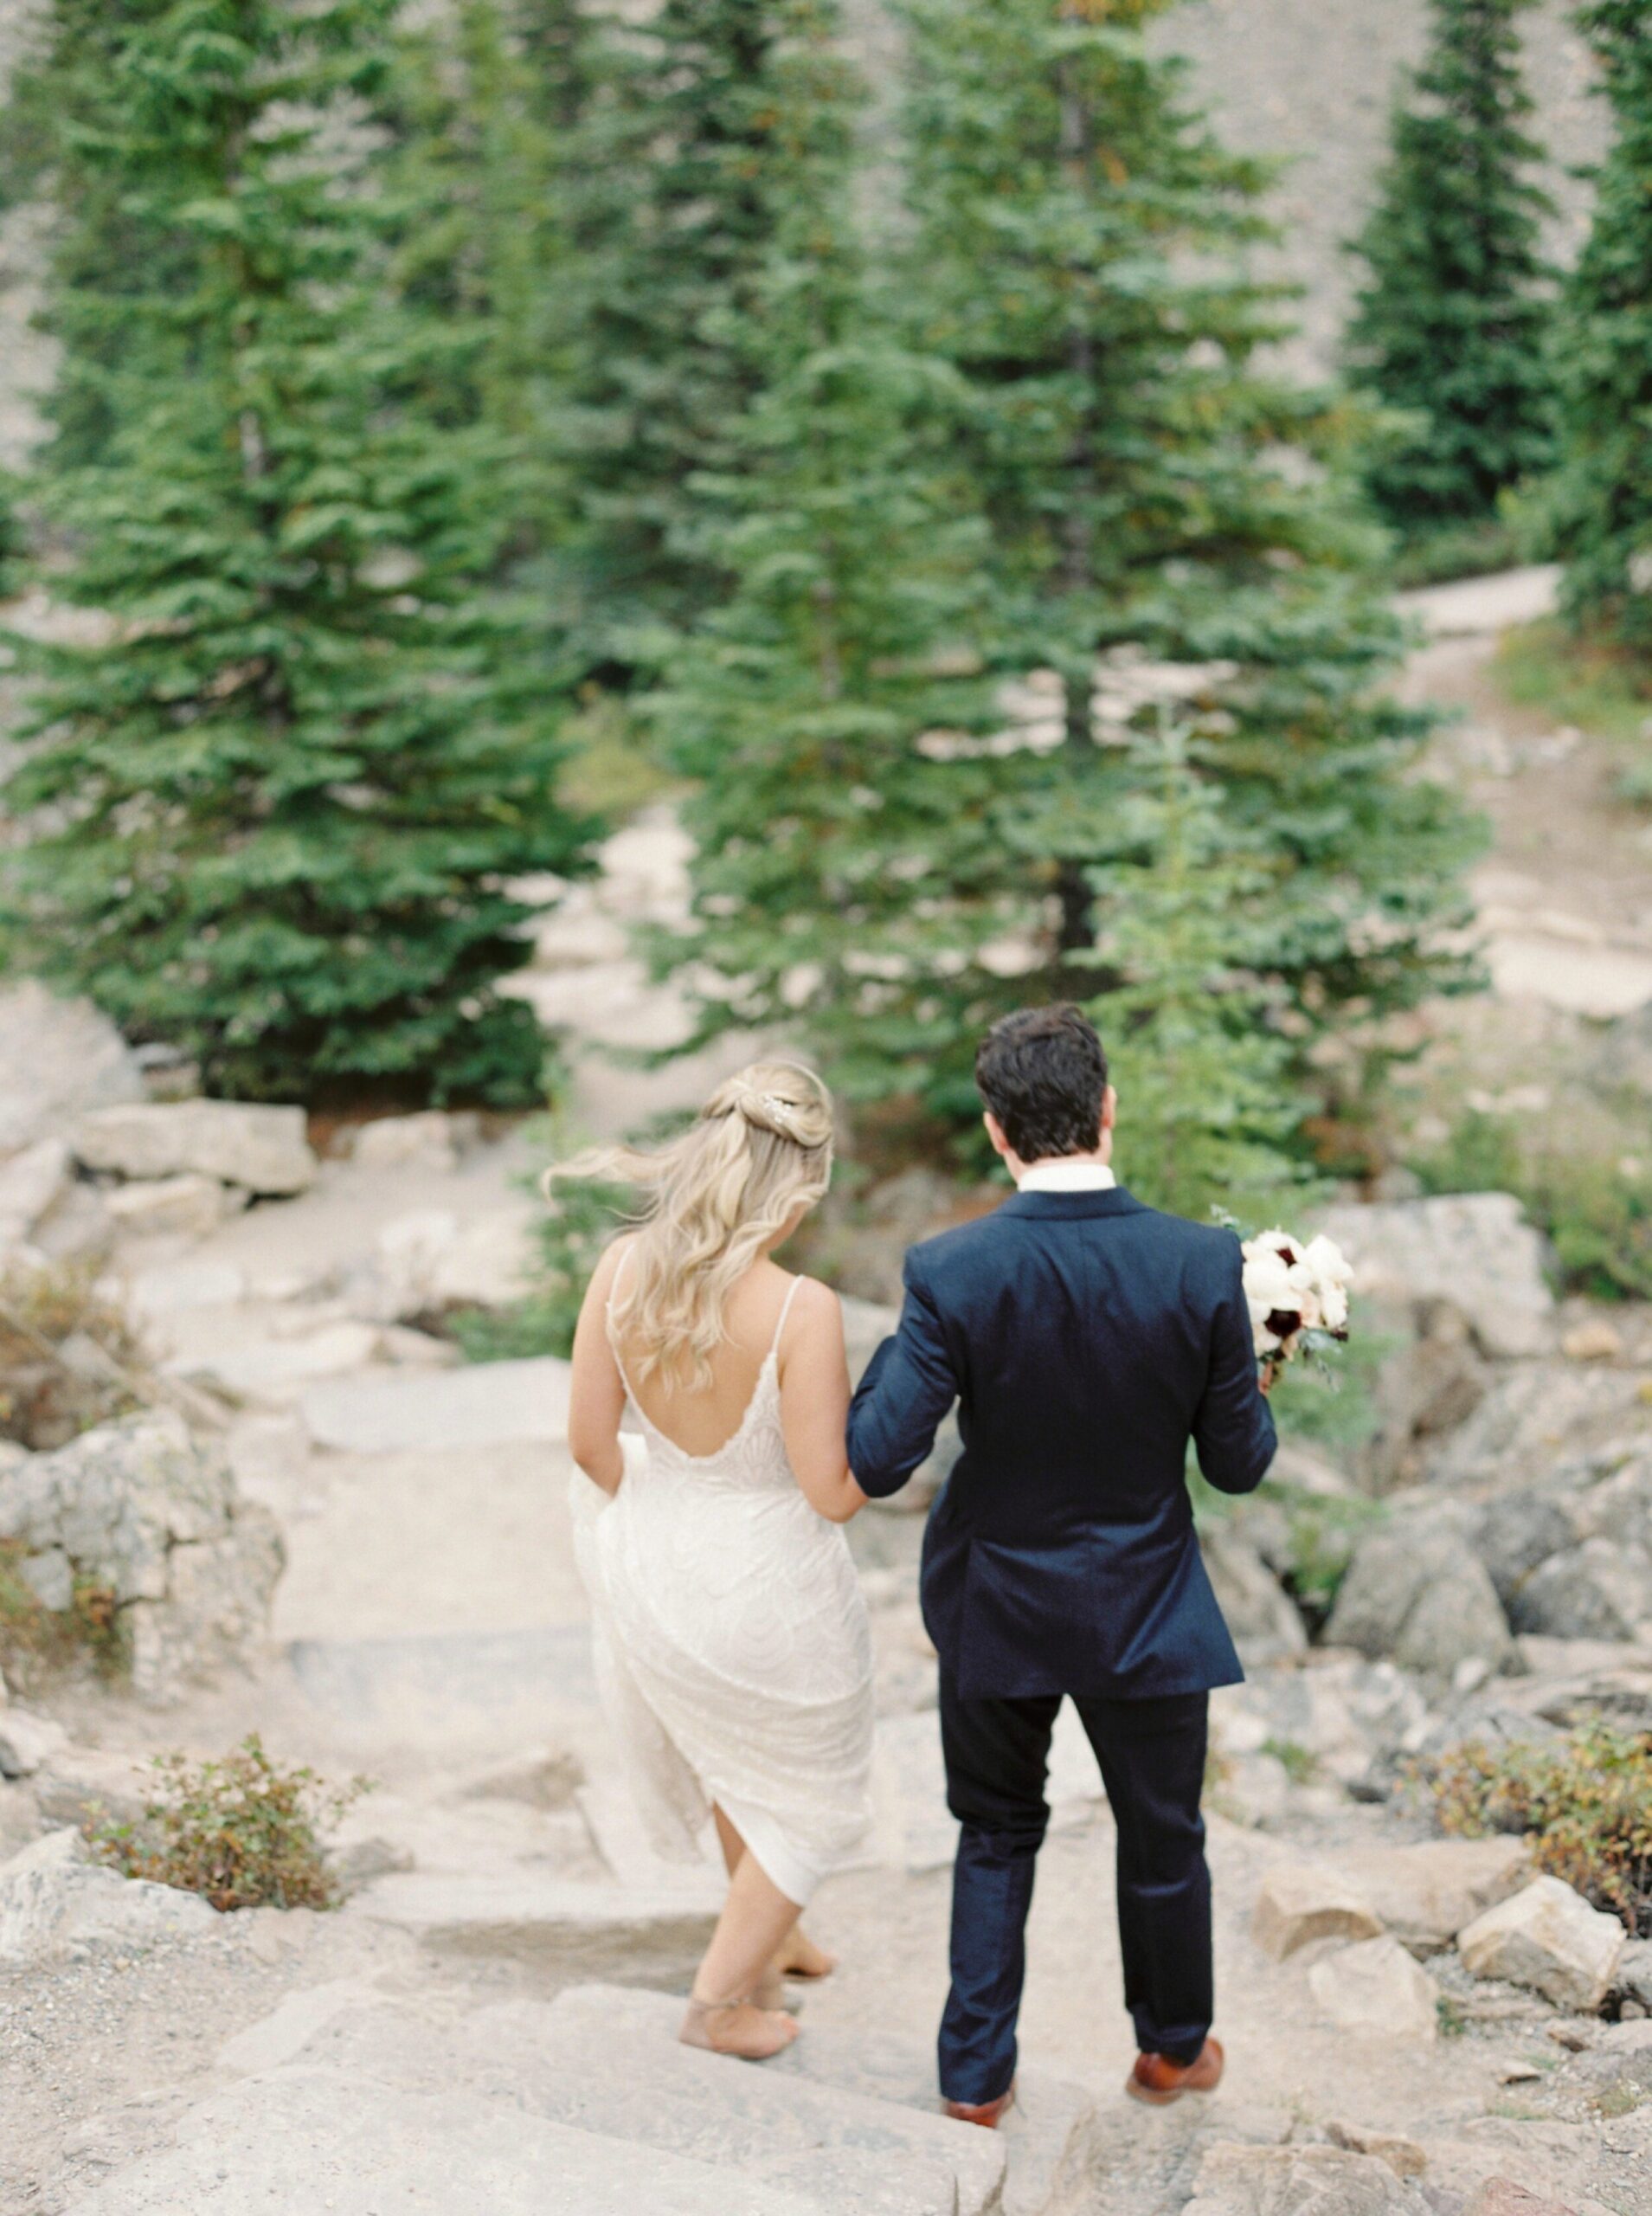  Lake Louise wedding photographers | Post Hotel Inn | Intimate mini wedding ceremony 